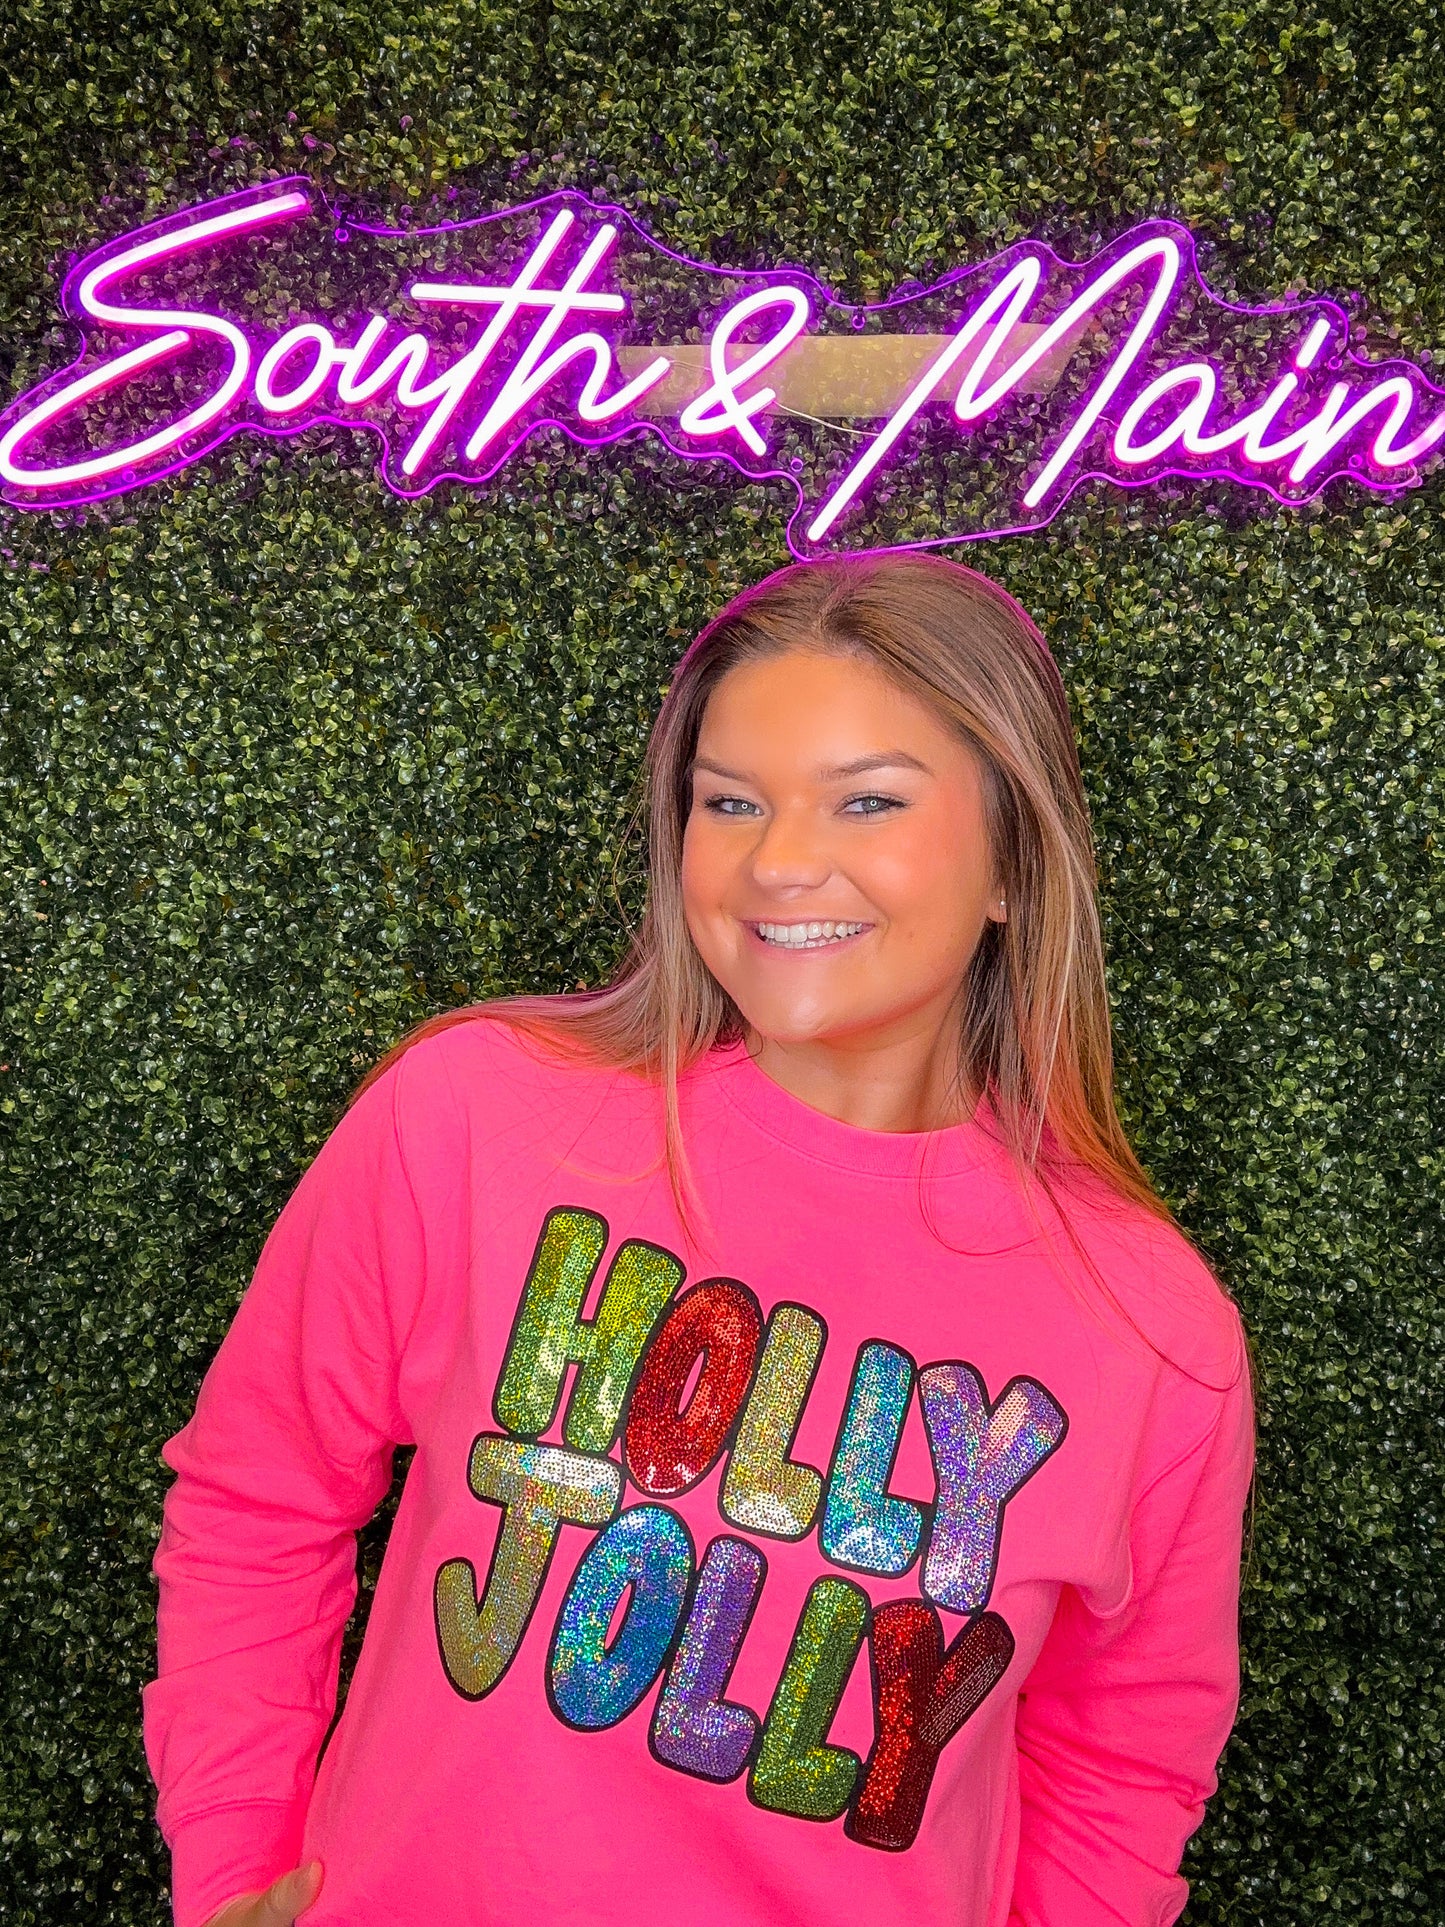 HOLLY JOLLY Sequin Sweatshirt - Bright Pink